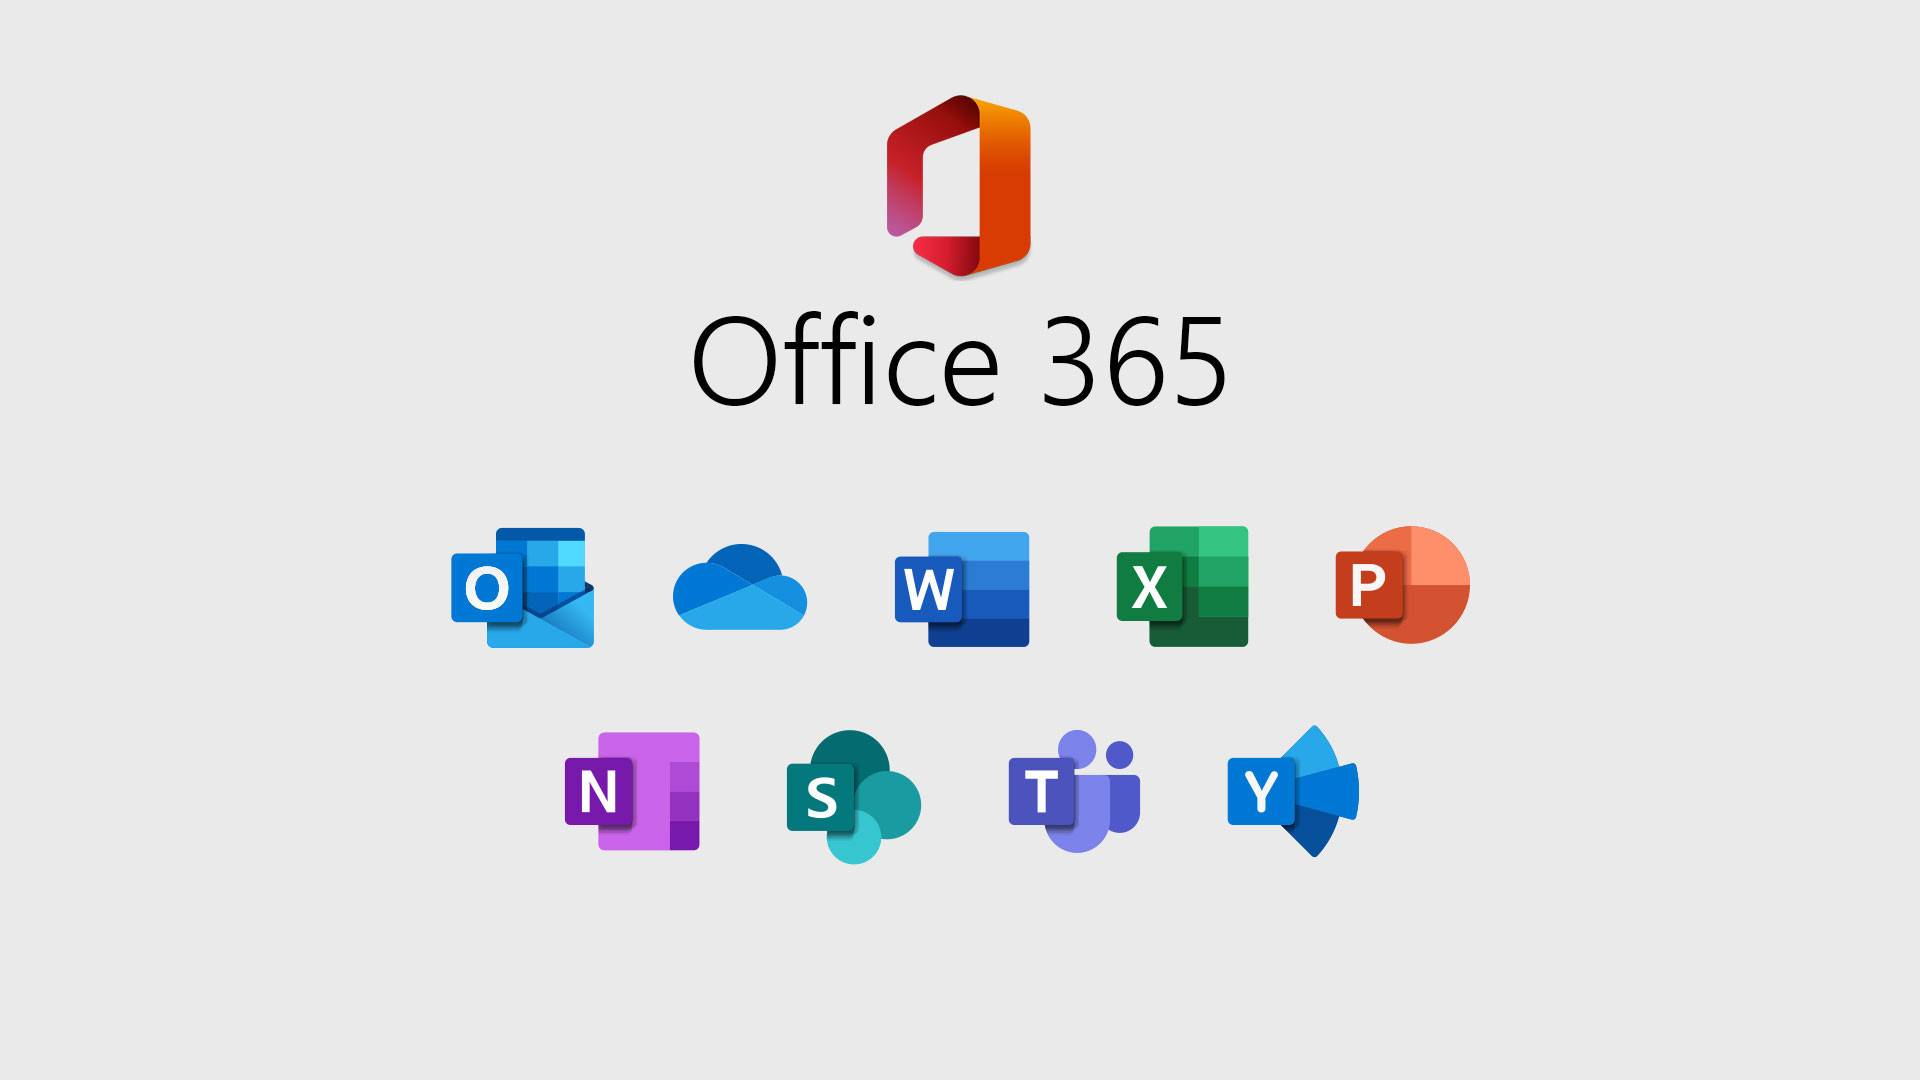 Microsoft Office 365 (PC) Key cheap - Price of $4.62